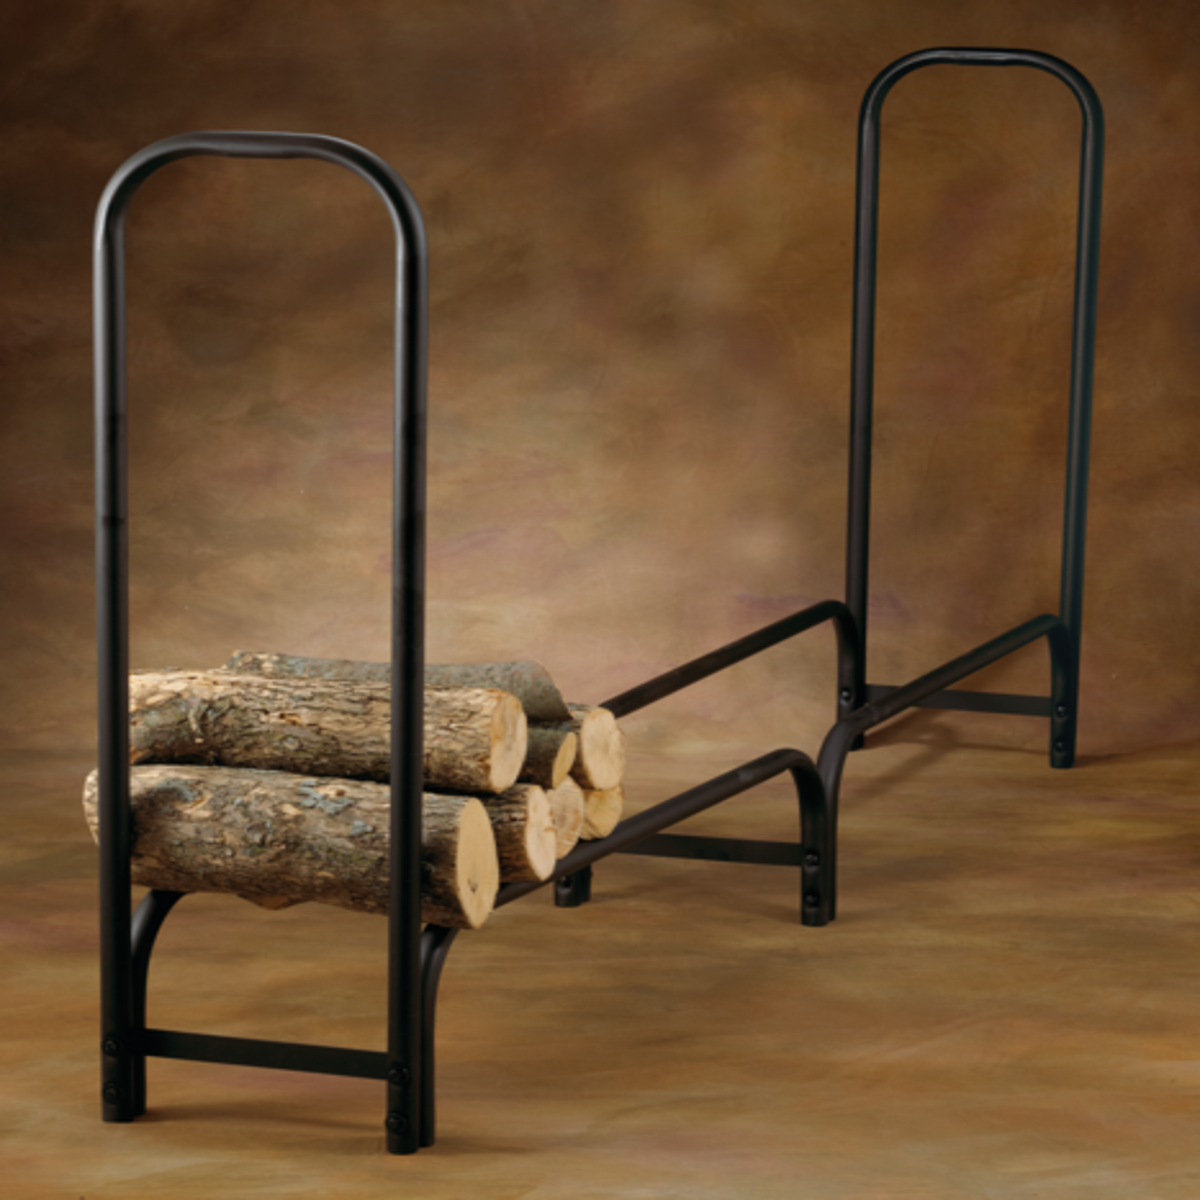 Log Racks & Carriers